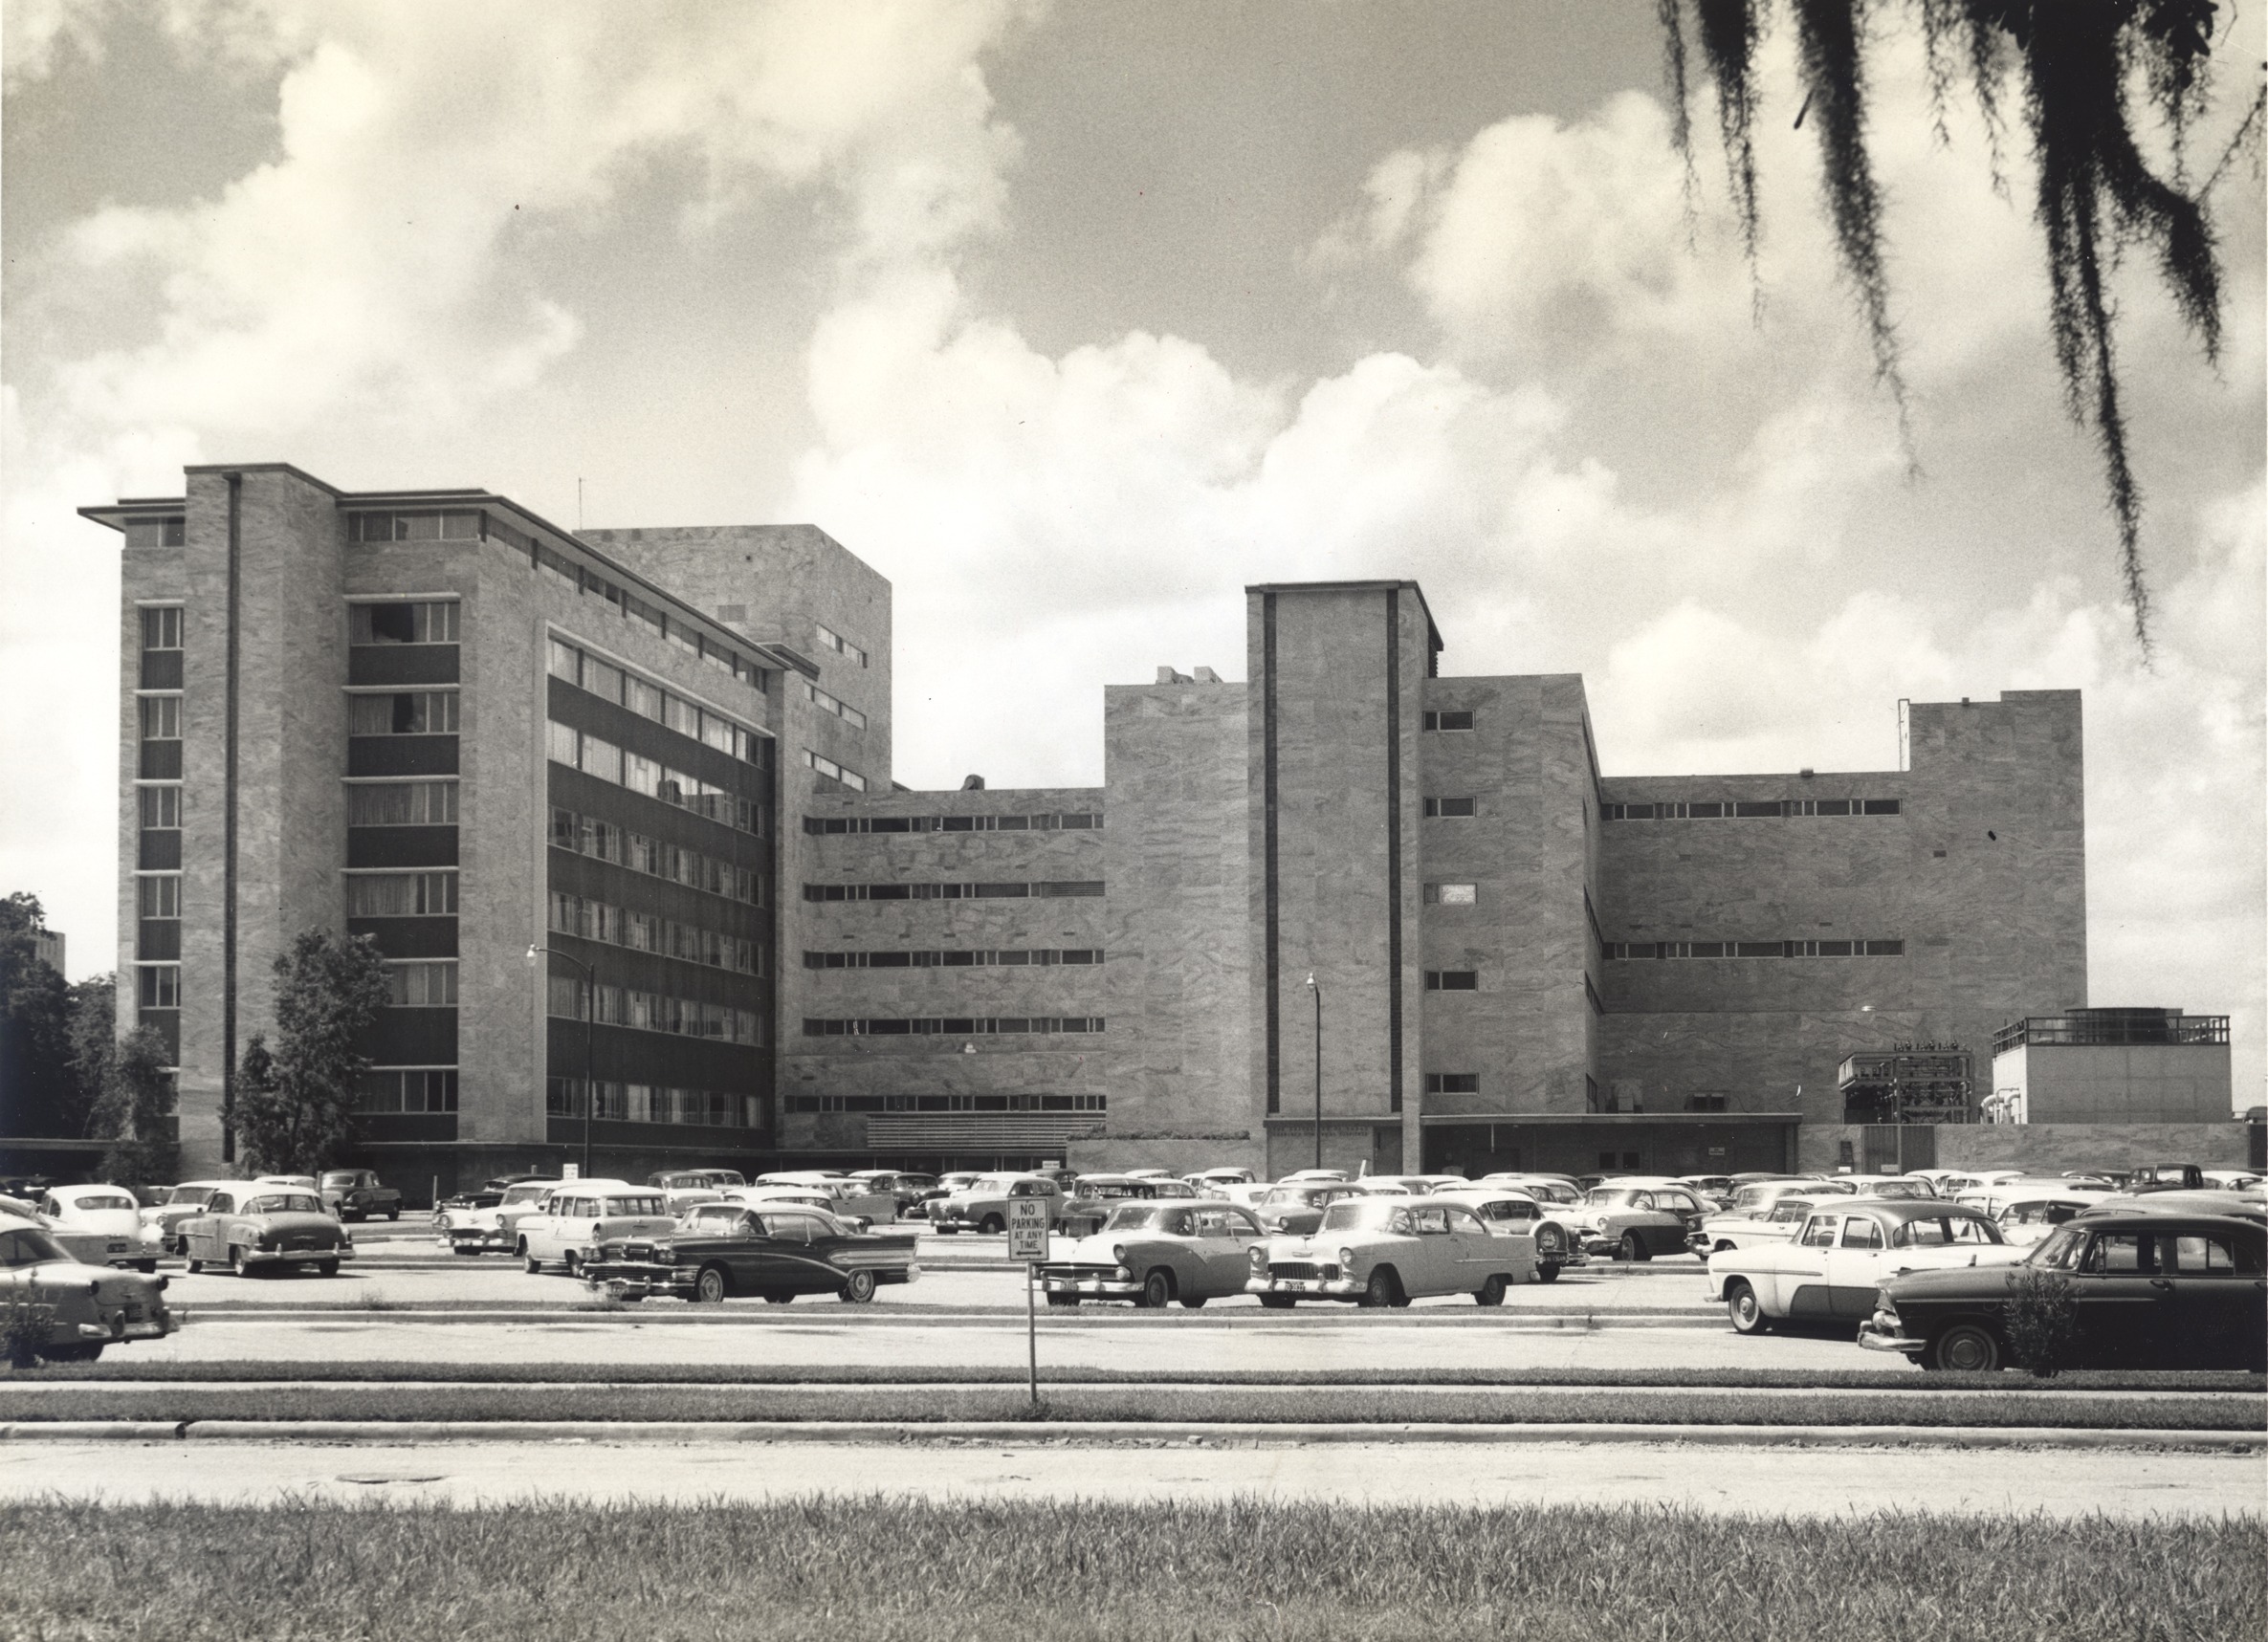 MD Anderson Cancer Hospital, circa 1958 (MS070 Series VIII, Box 188, folder 3)